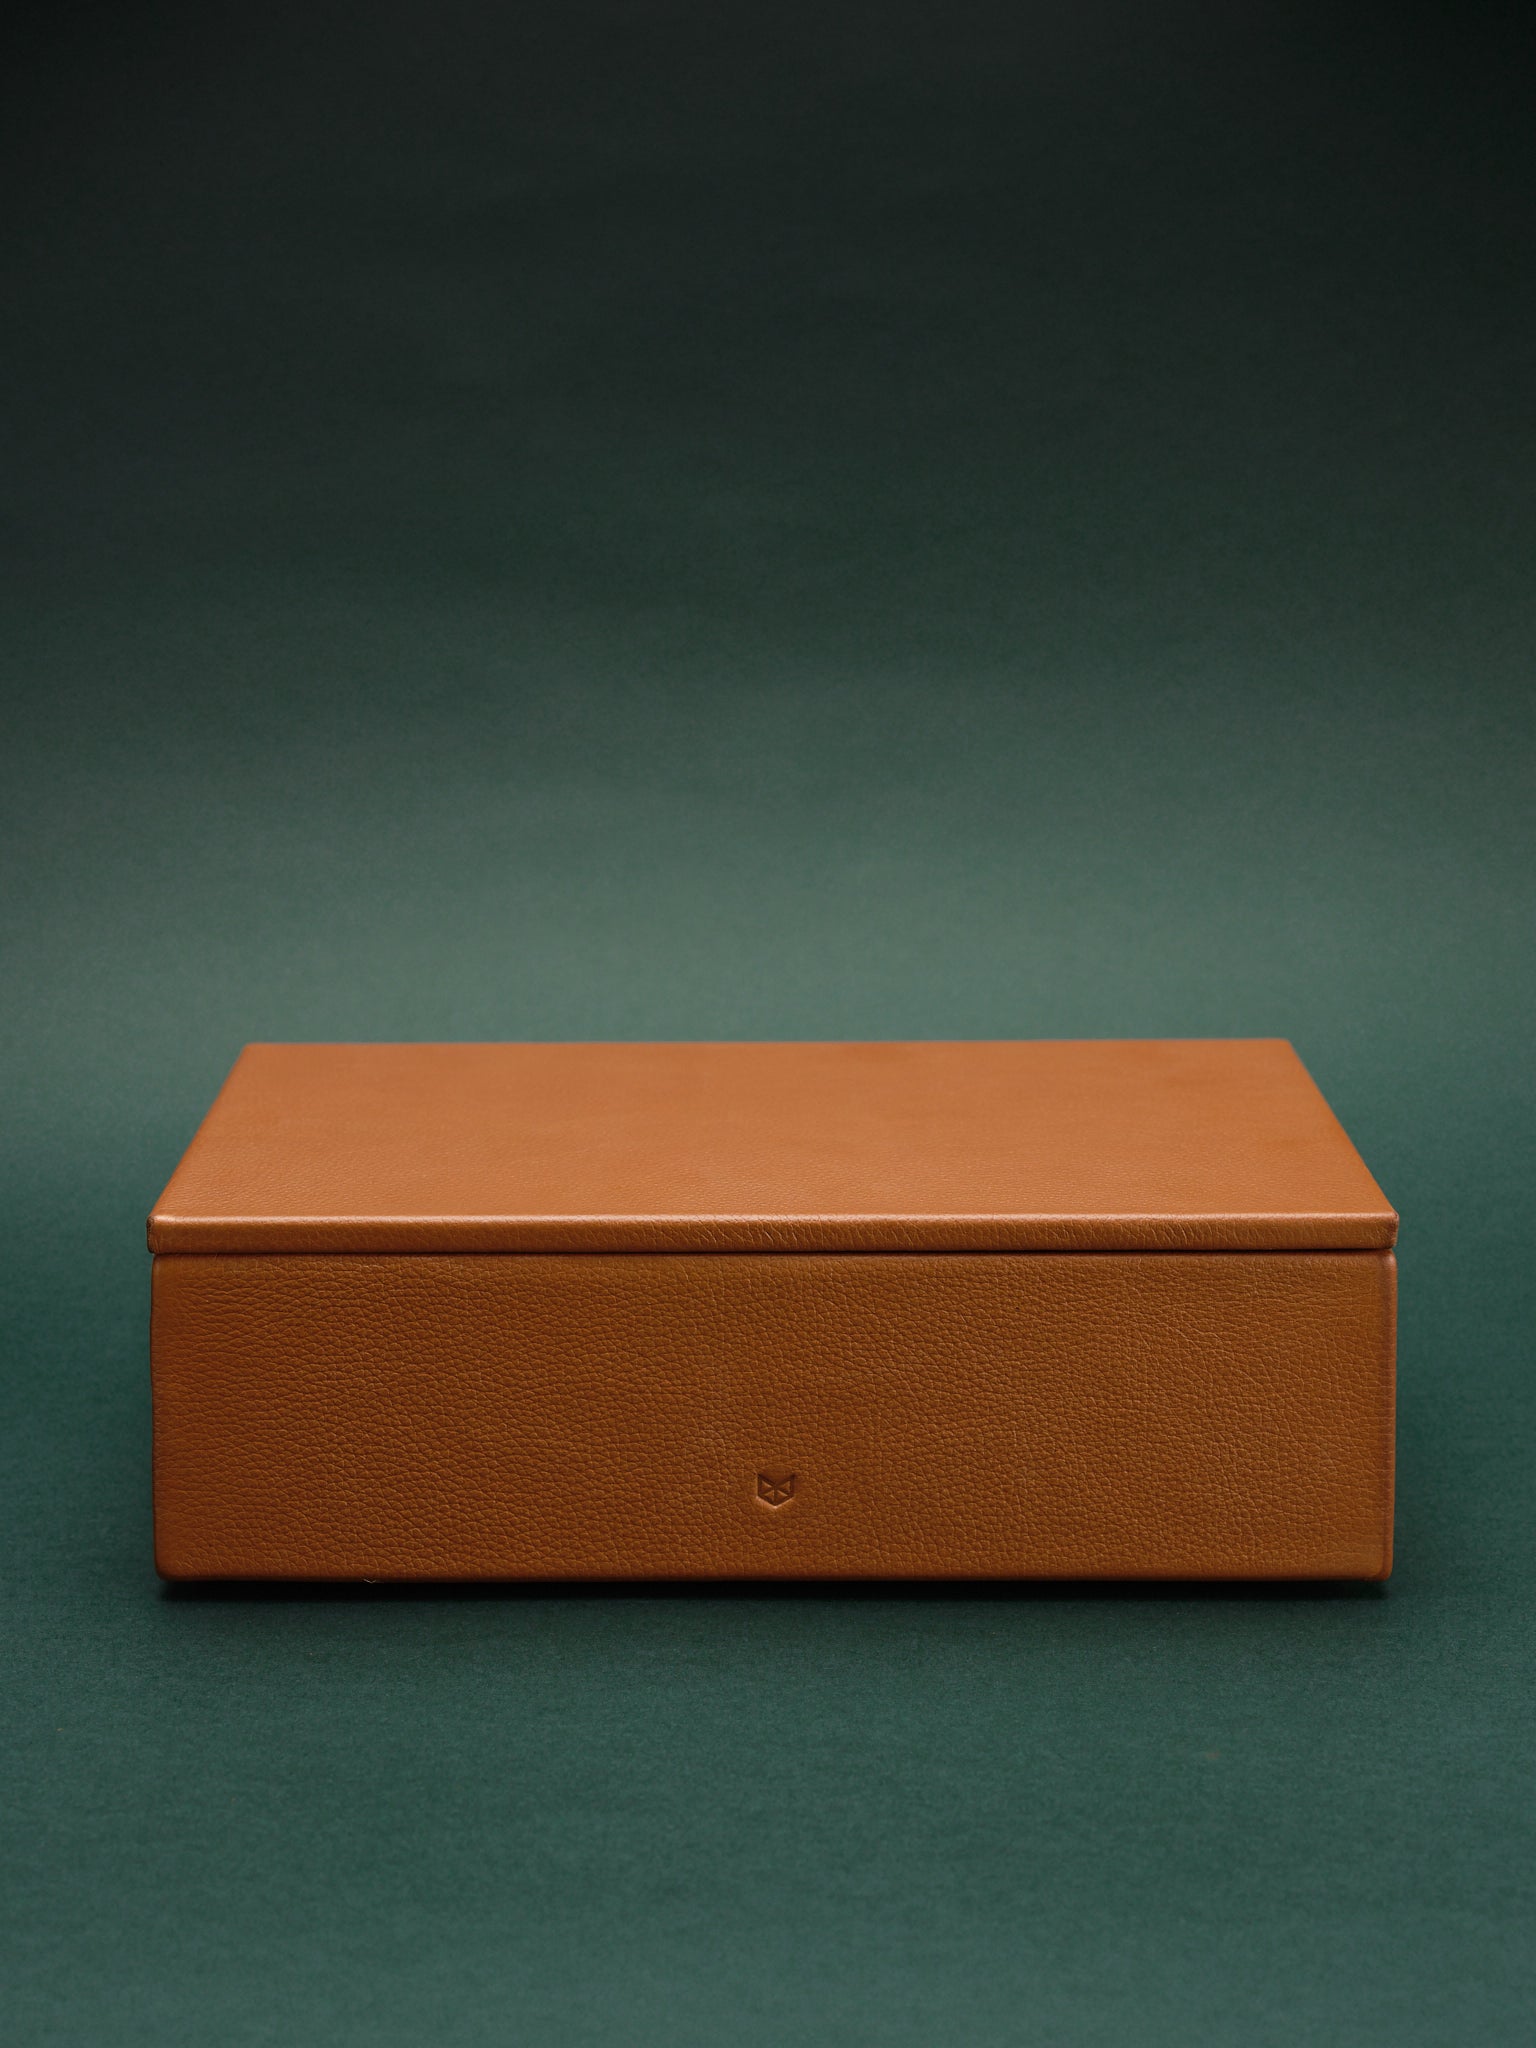 Sturdy Hard Case. Leather Watch Case. Men's Watch Box Tan by Capra Leather